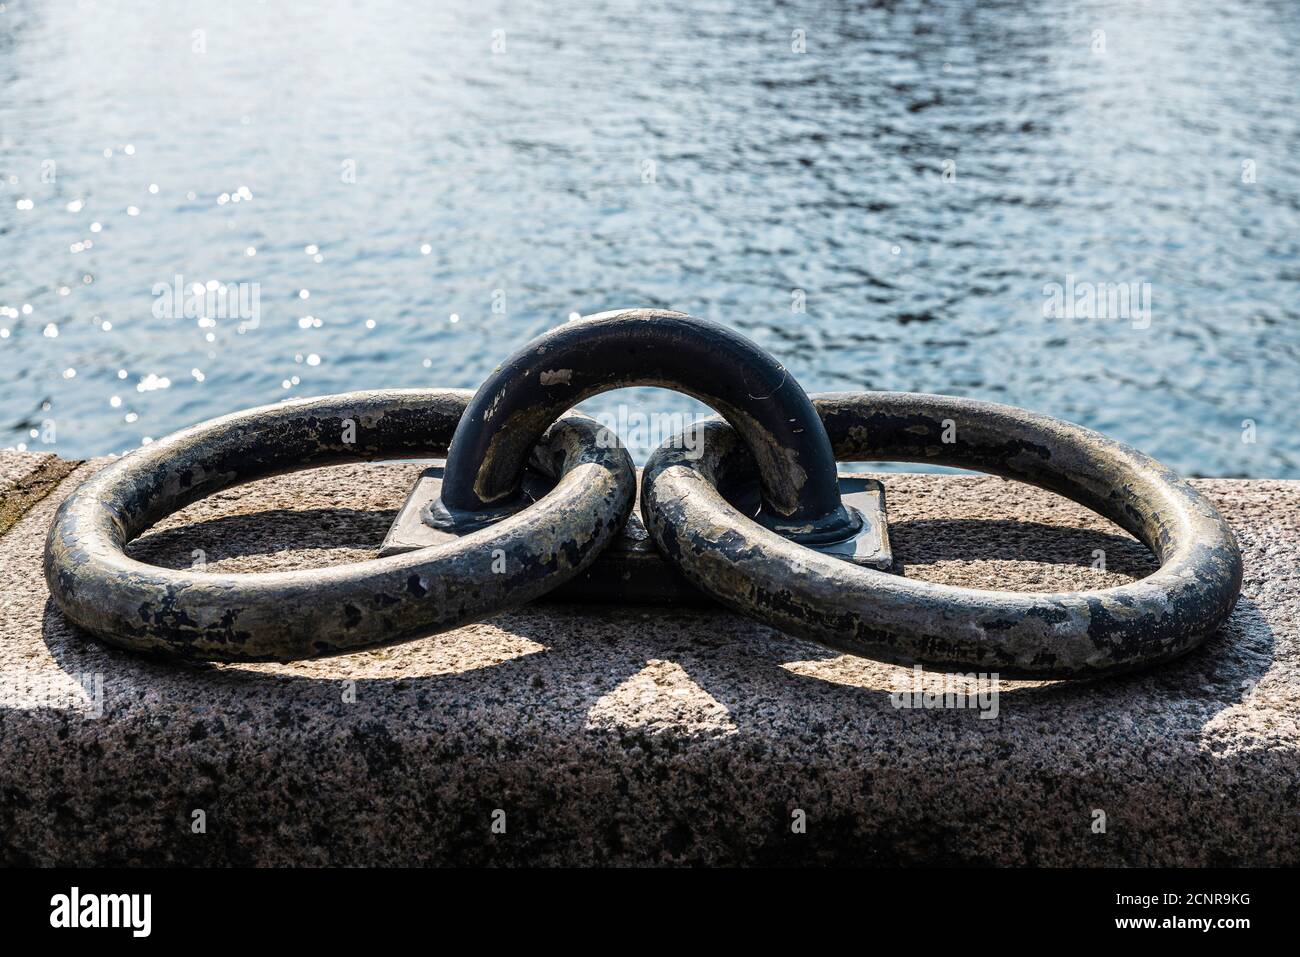 Old rusty metal moorage in the port of Copenhagen, Denmark as background Stock Photo